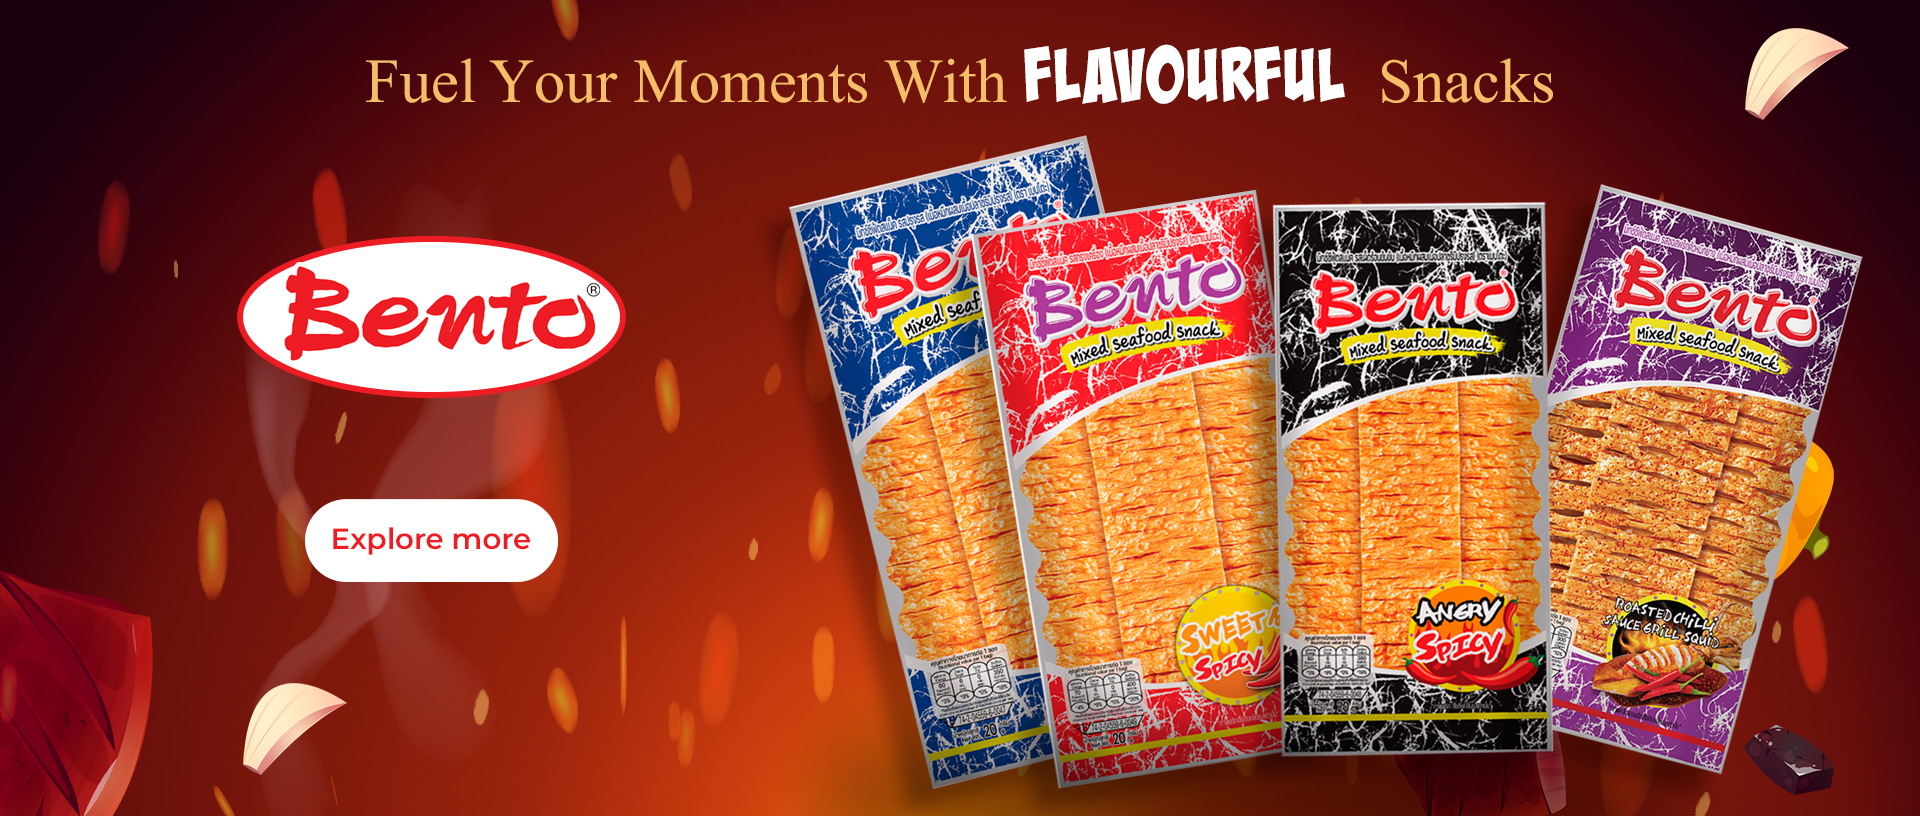 bento feature products jk foods uk